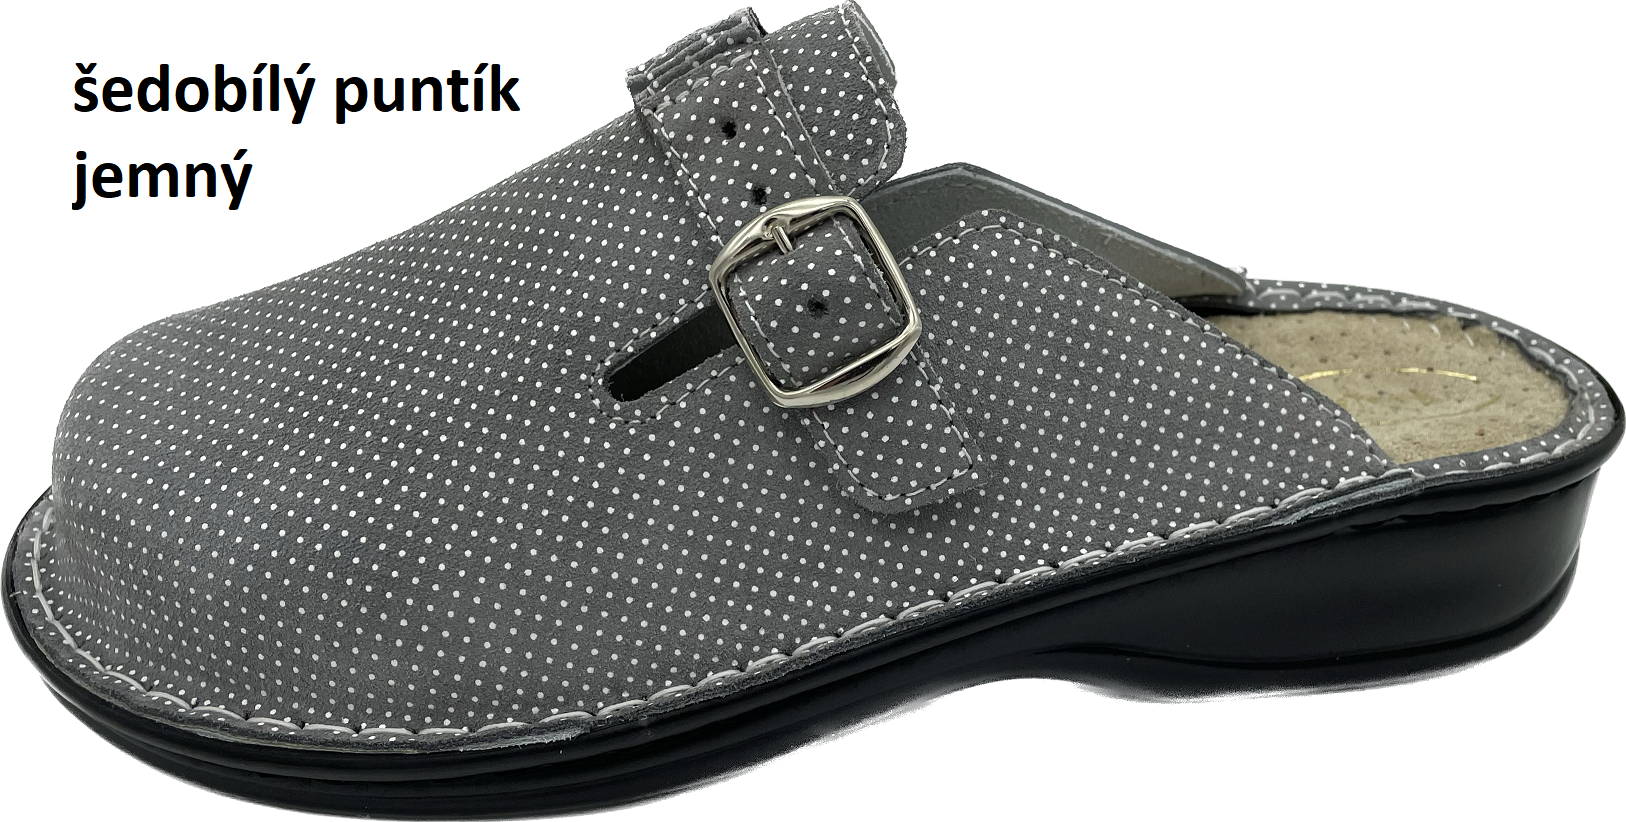 Boty Hanák vzor 308 - černá podešev Barva usně: šedobílý puntík jemný hladká, Velikosti obuvi: 36